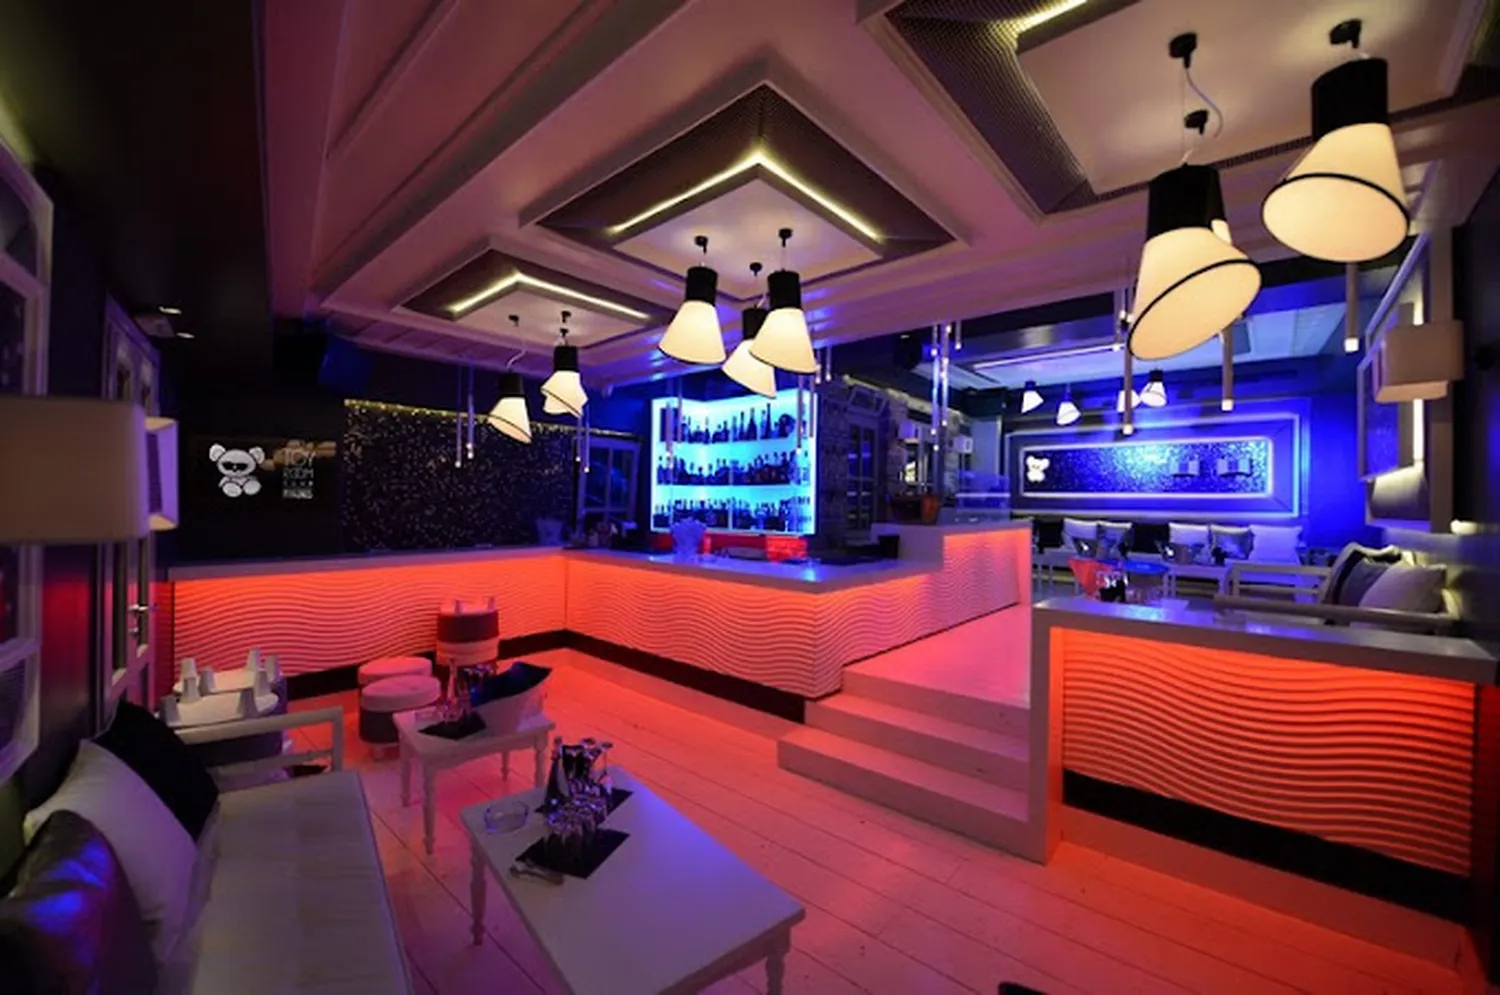 Toyroom nightclub Mykonos